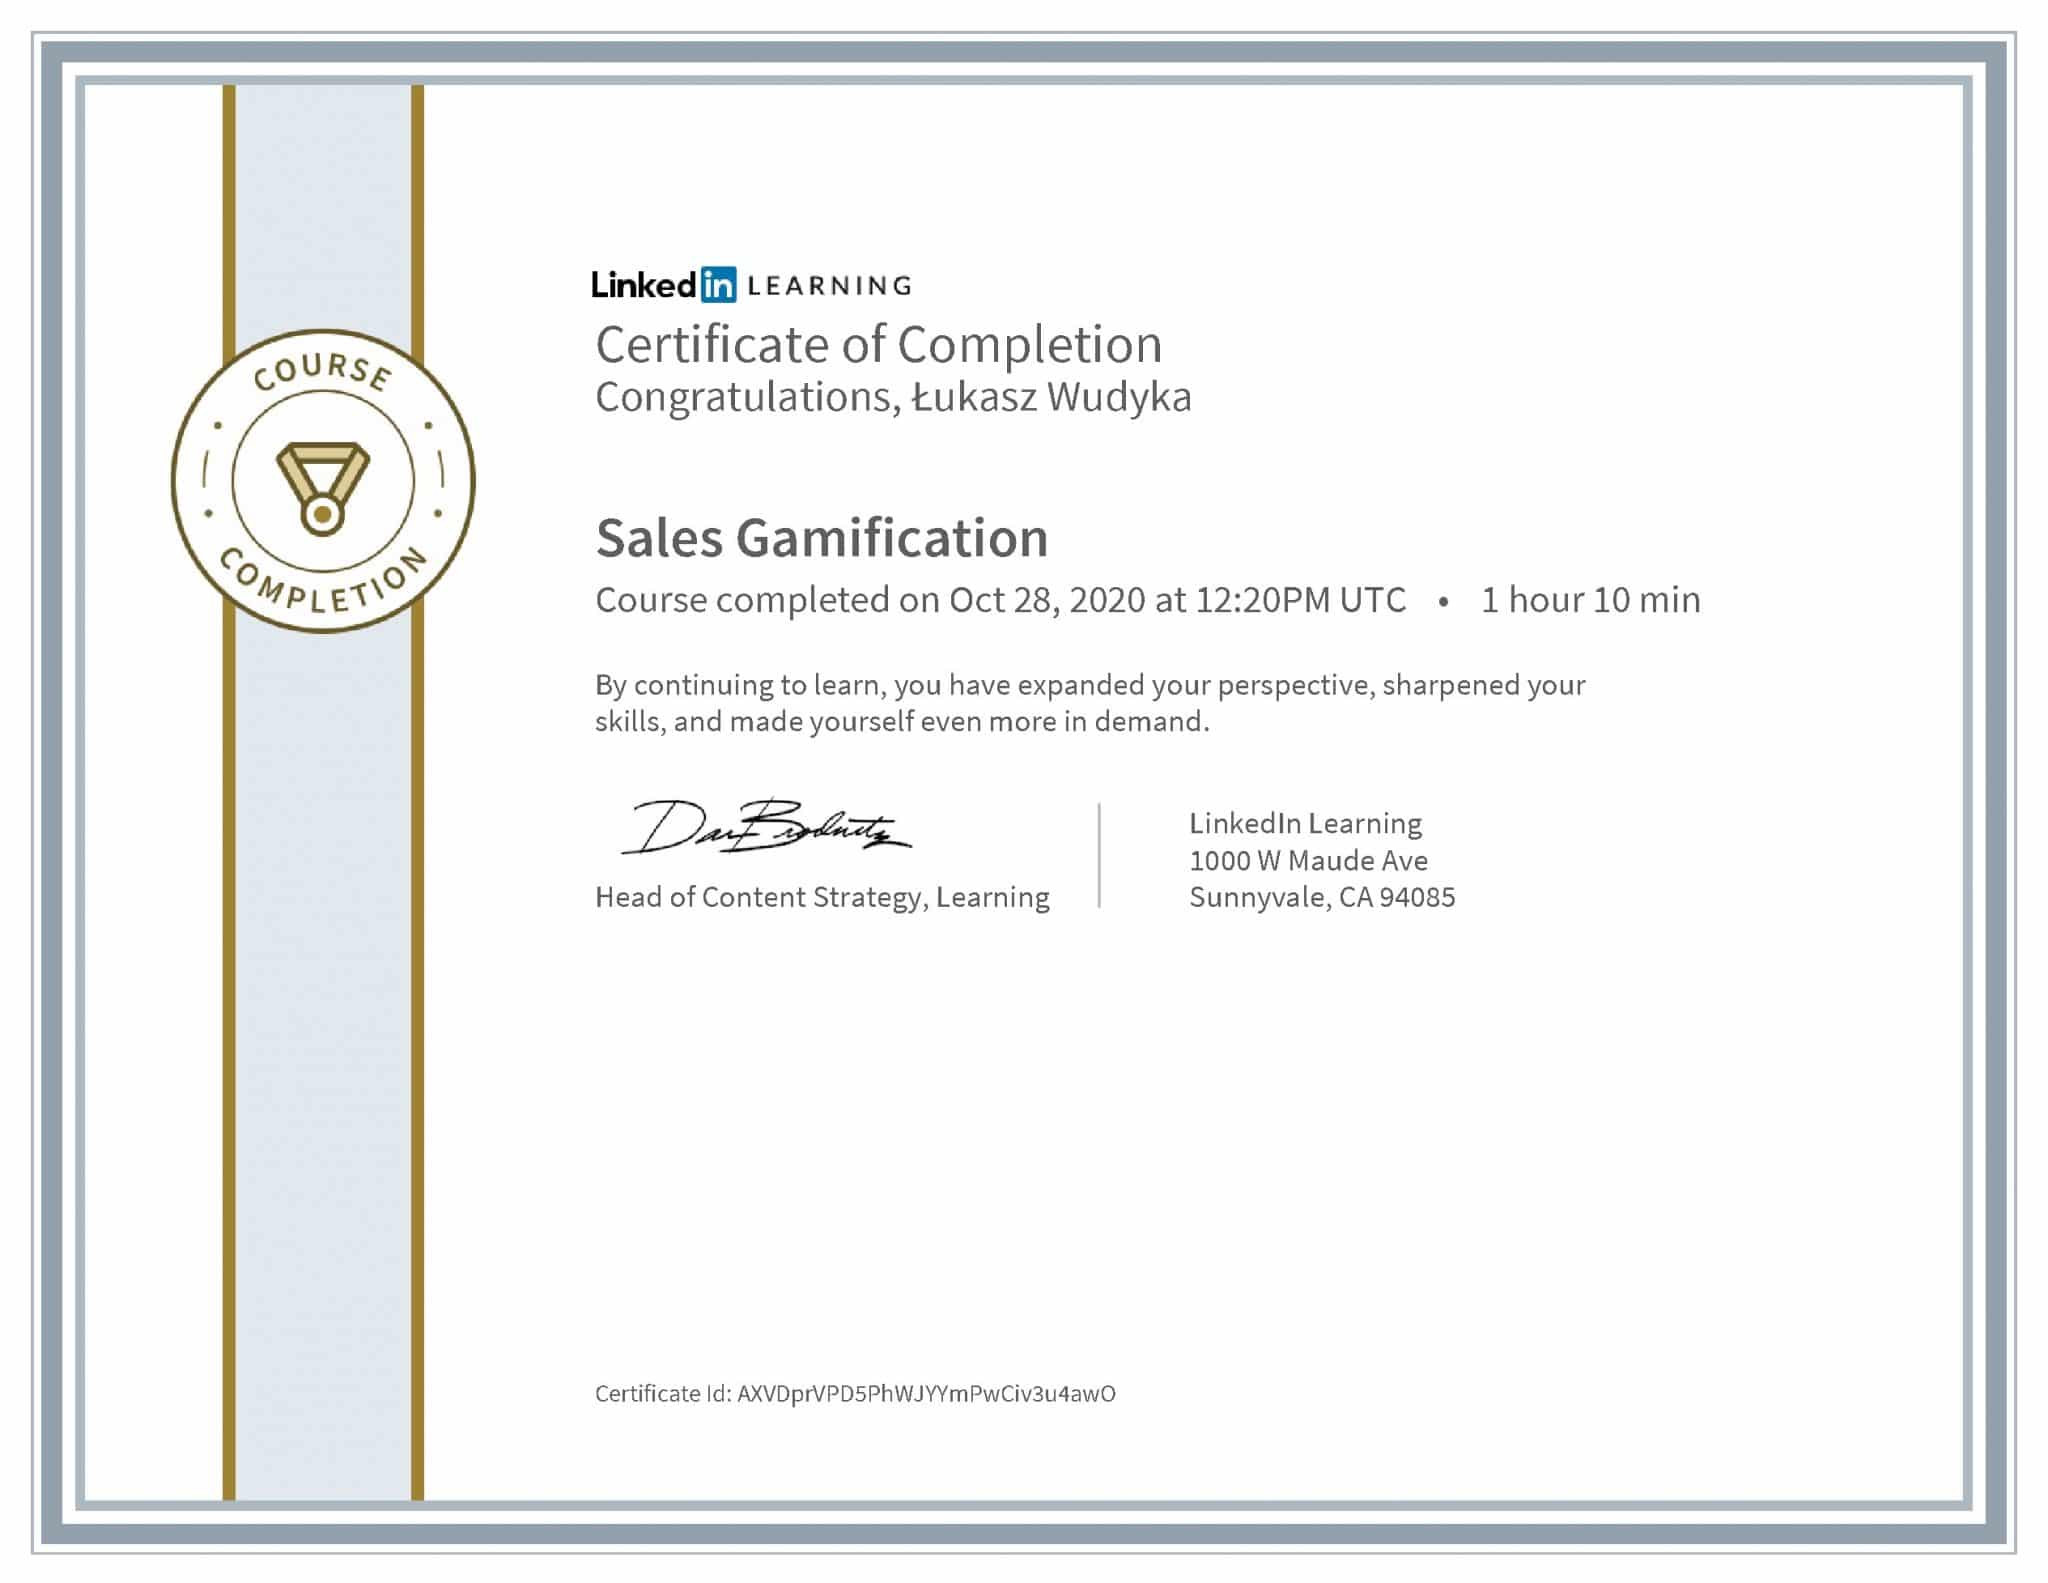 Łukasz Wudyka certyfikat LinkedIn Sales Gamification